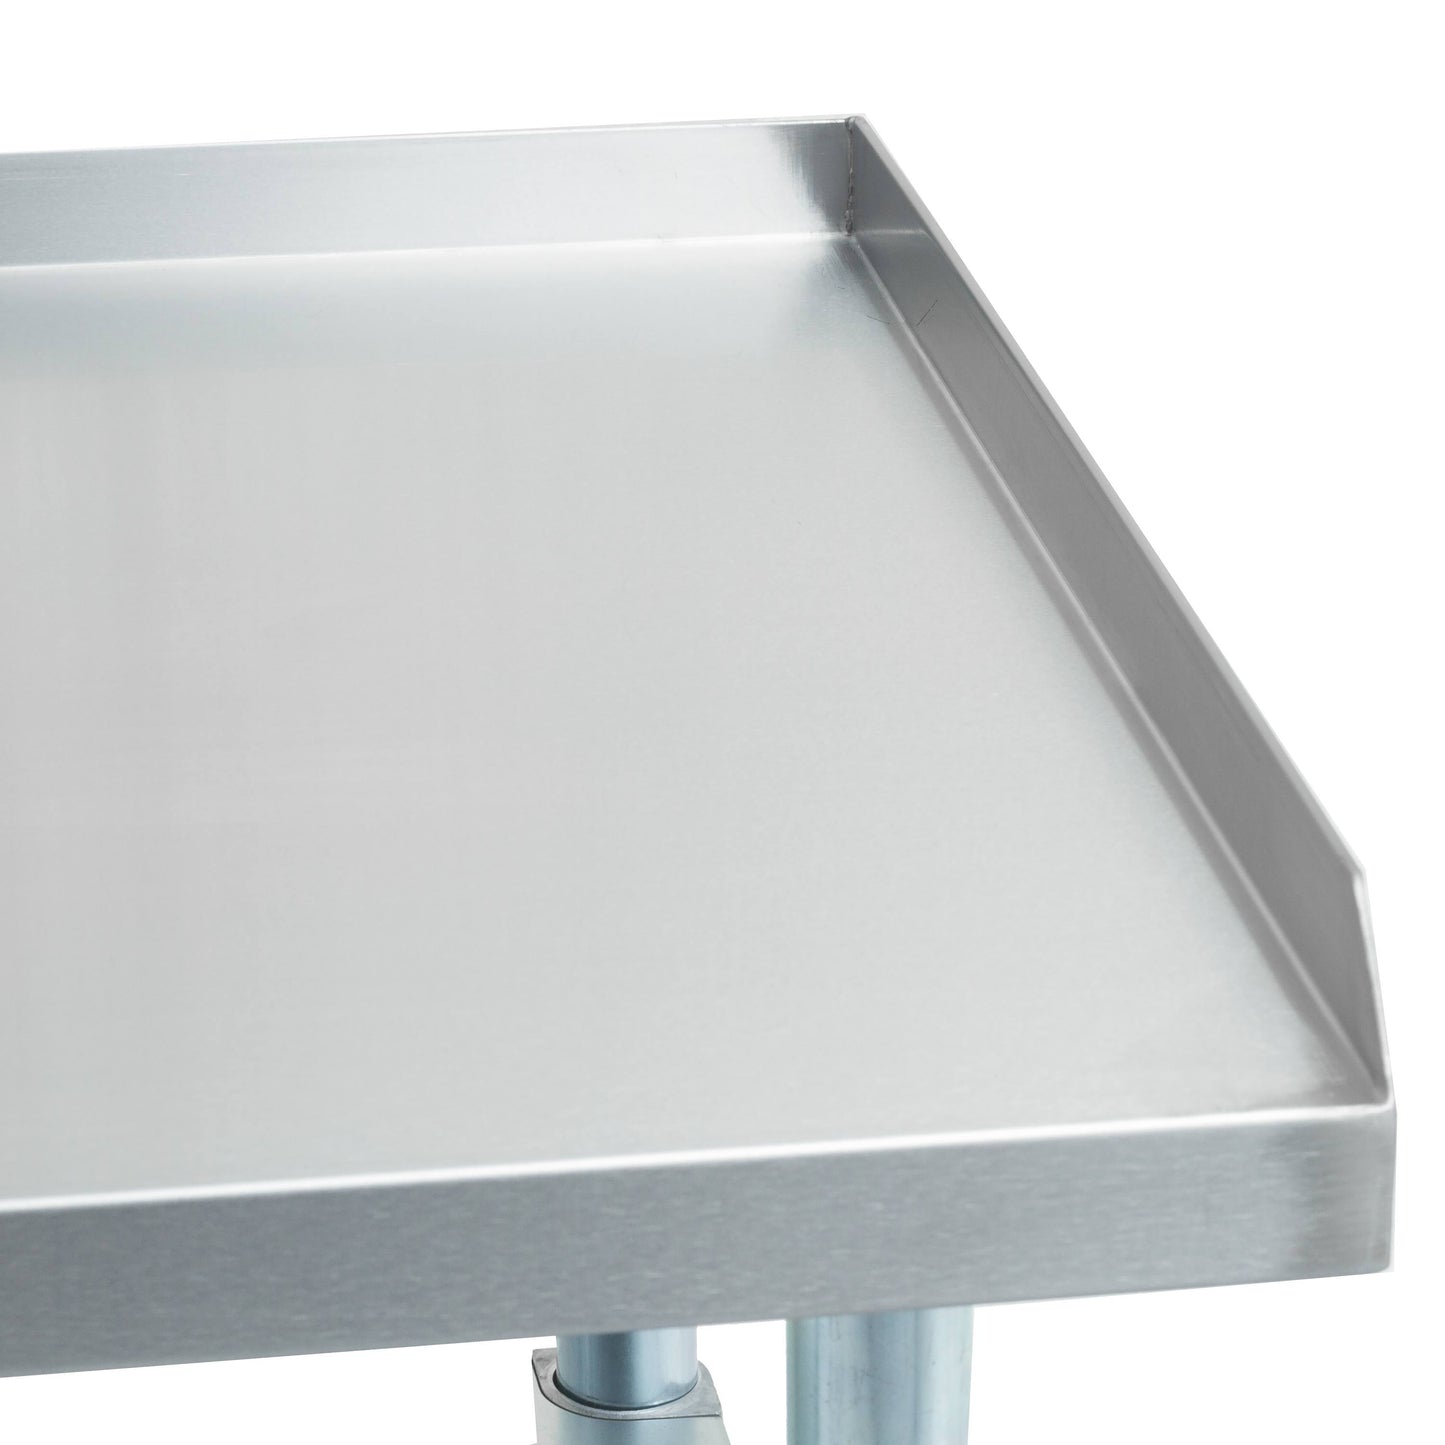 Thorinox DSTAND-2472-GS 24x72 Stainless Table - Galvanized Undershelf